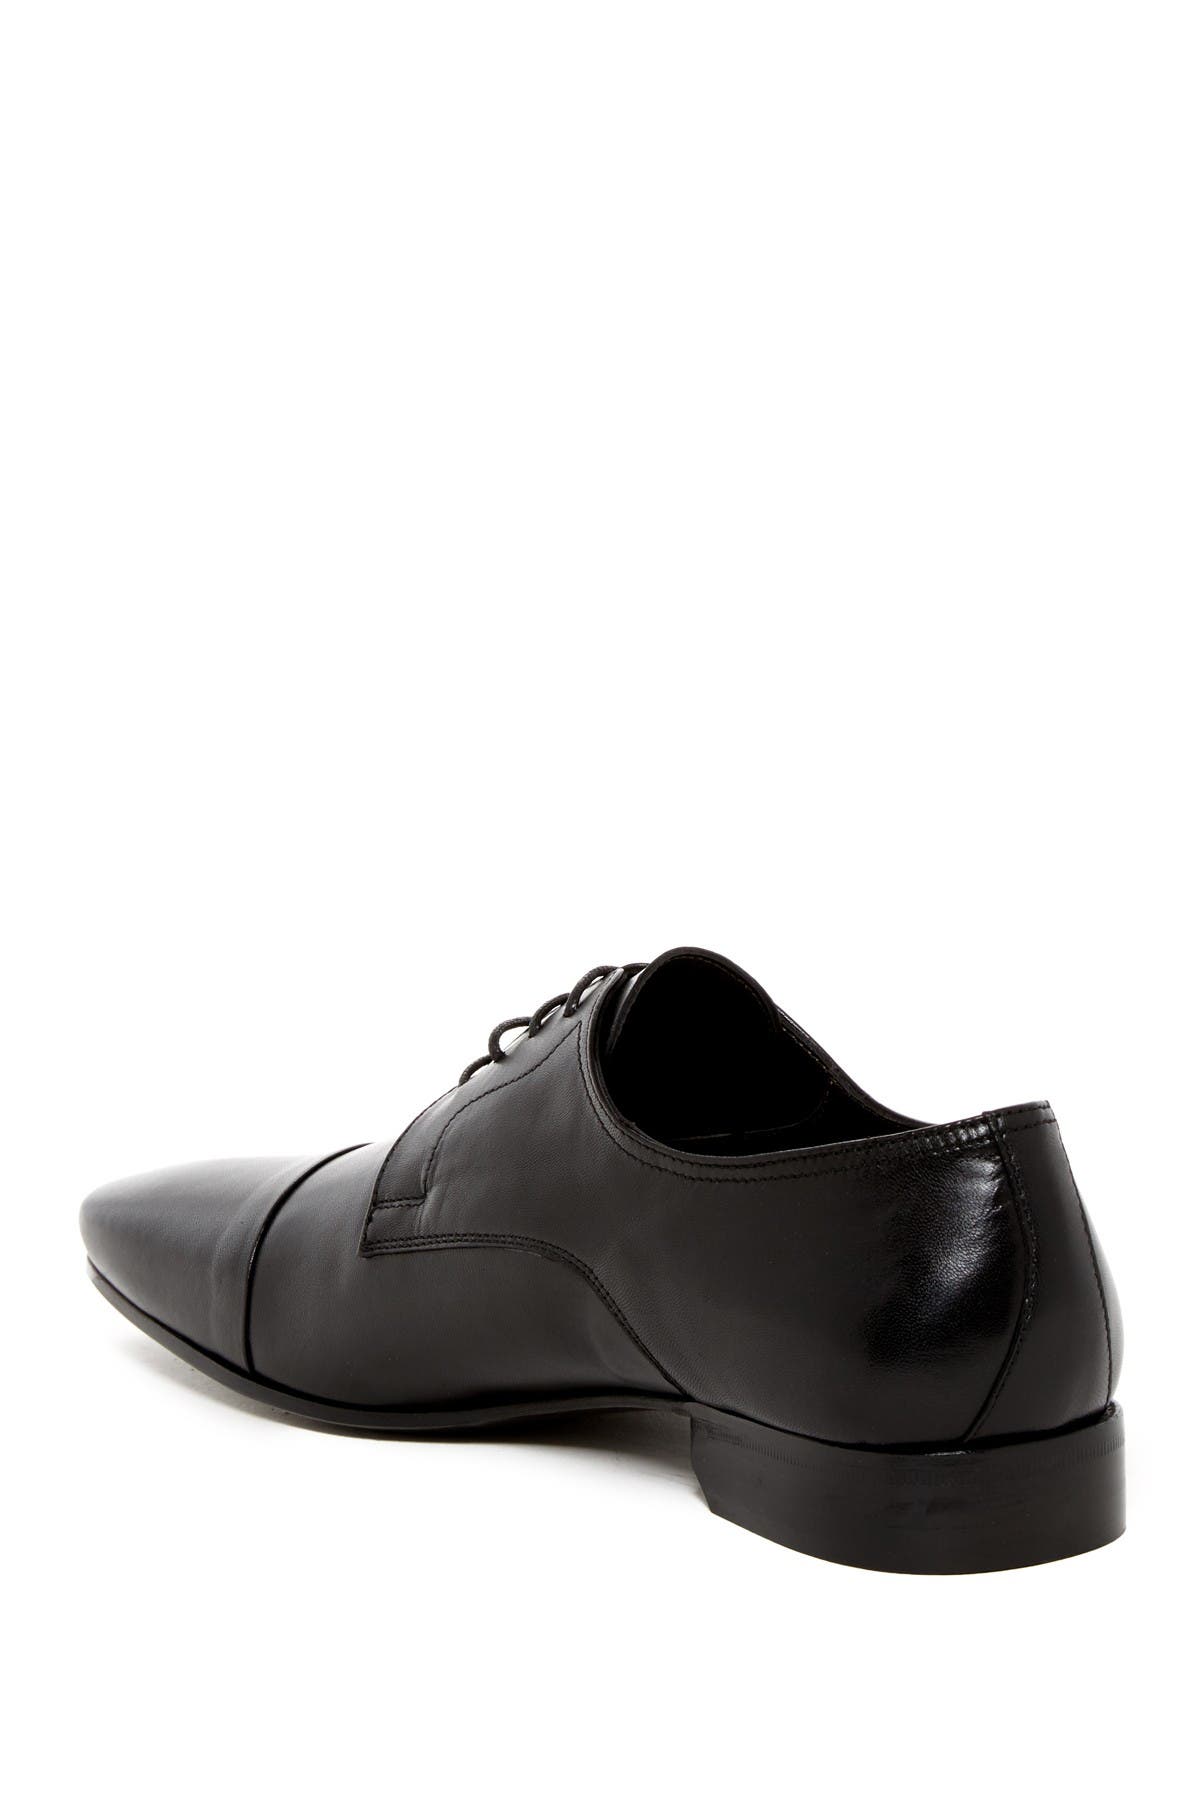 bruno magli derby shoes